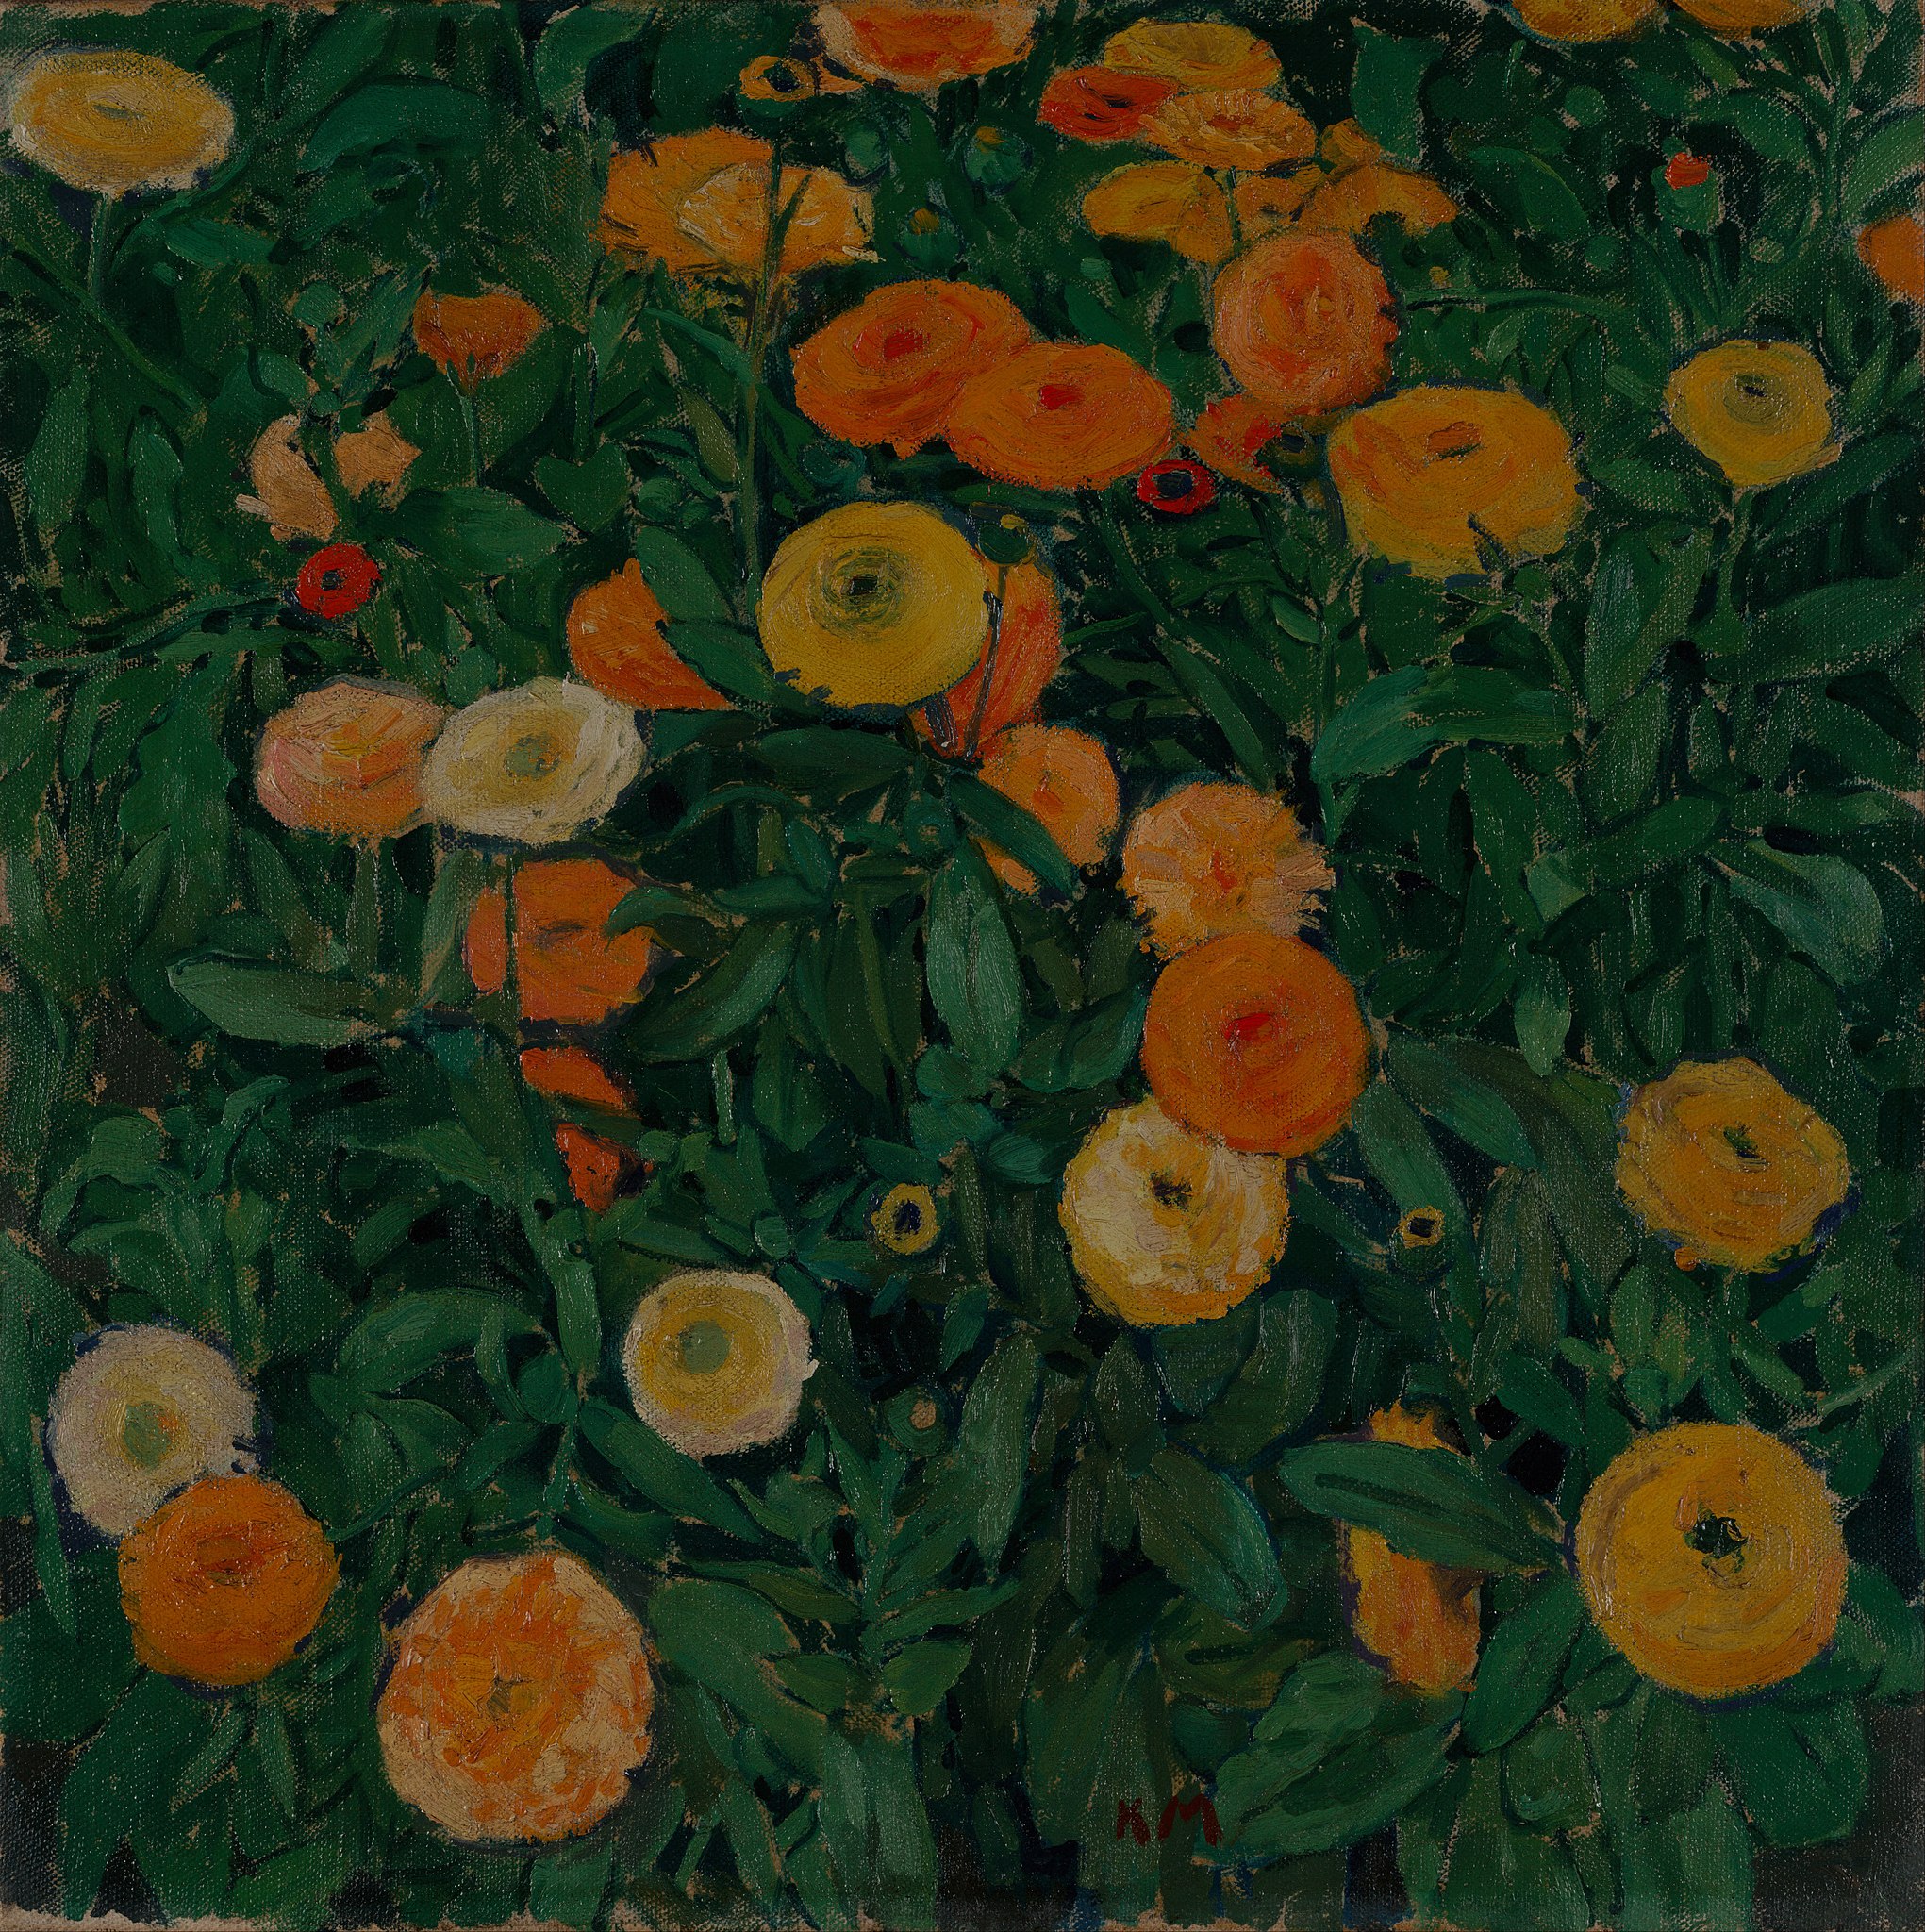 Marigolds by Koloman Moser - 1909 - 50.3 x 50.2 cm Leopold Museum